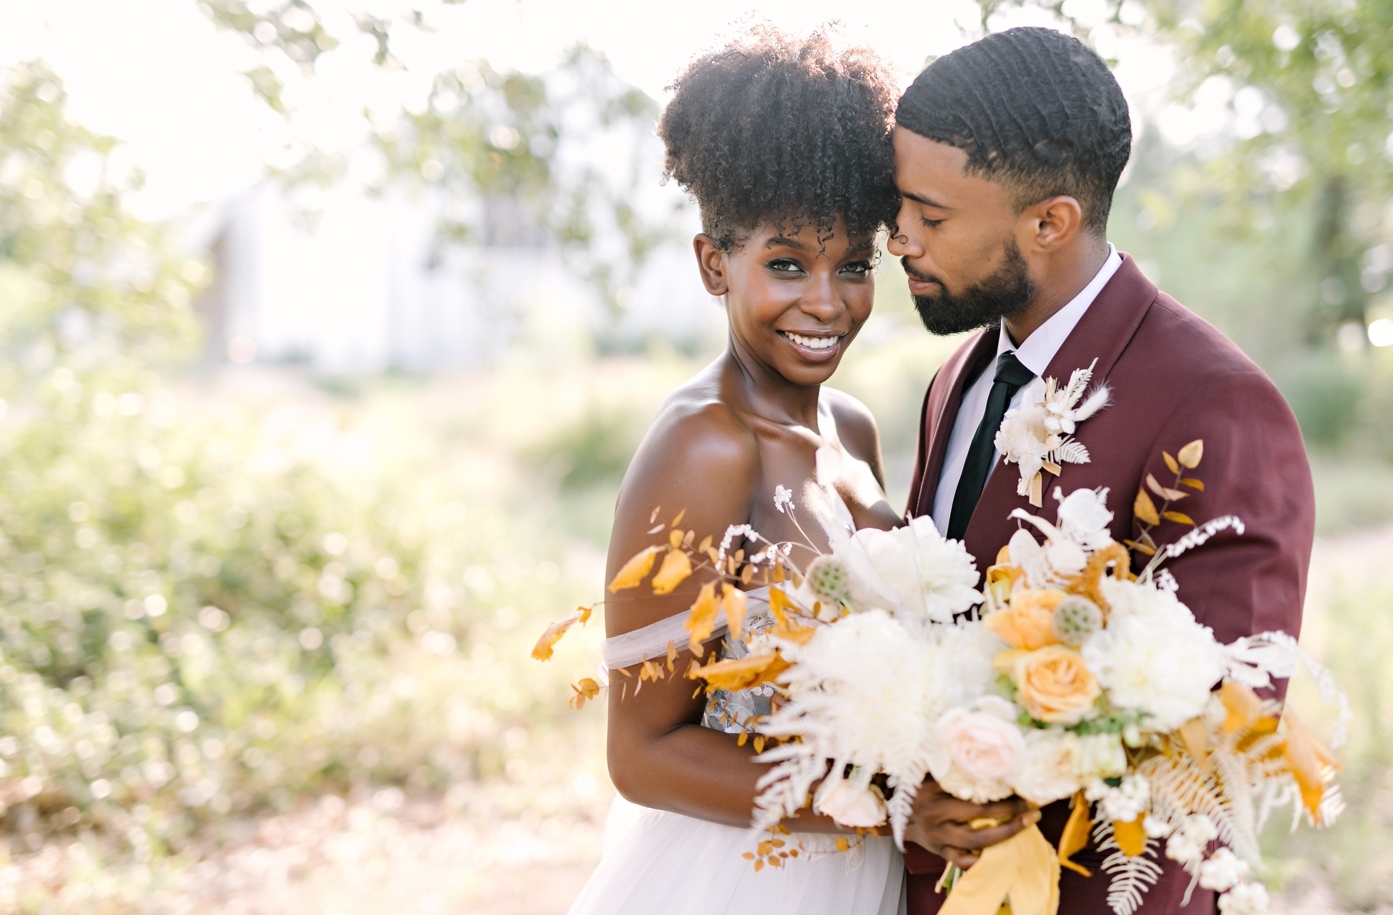 Best Wedding Day Tips From An Austin Photographer